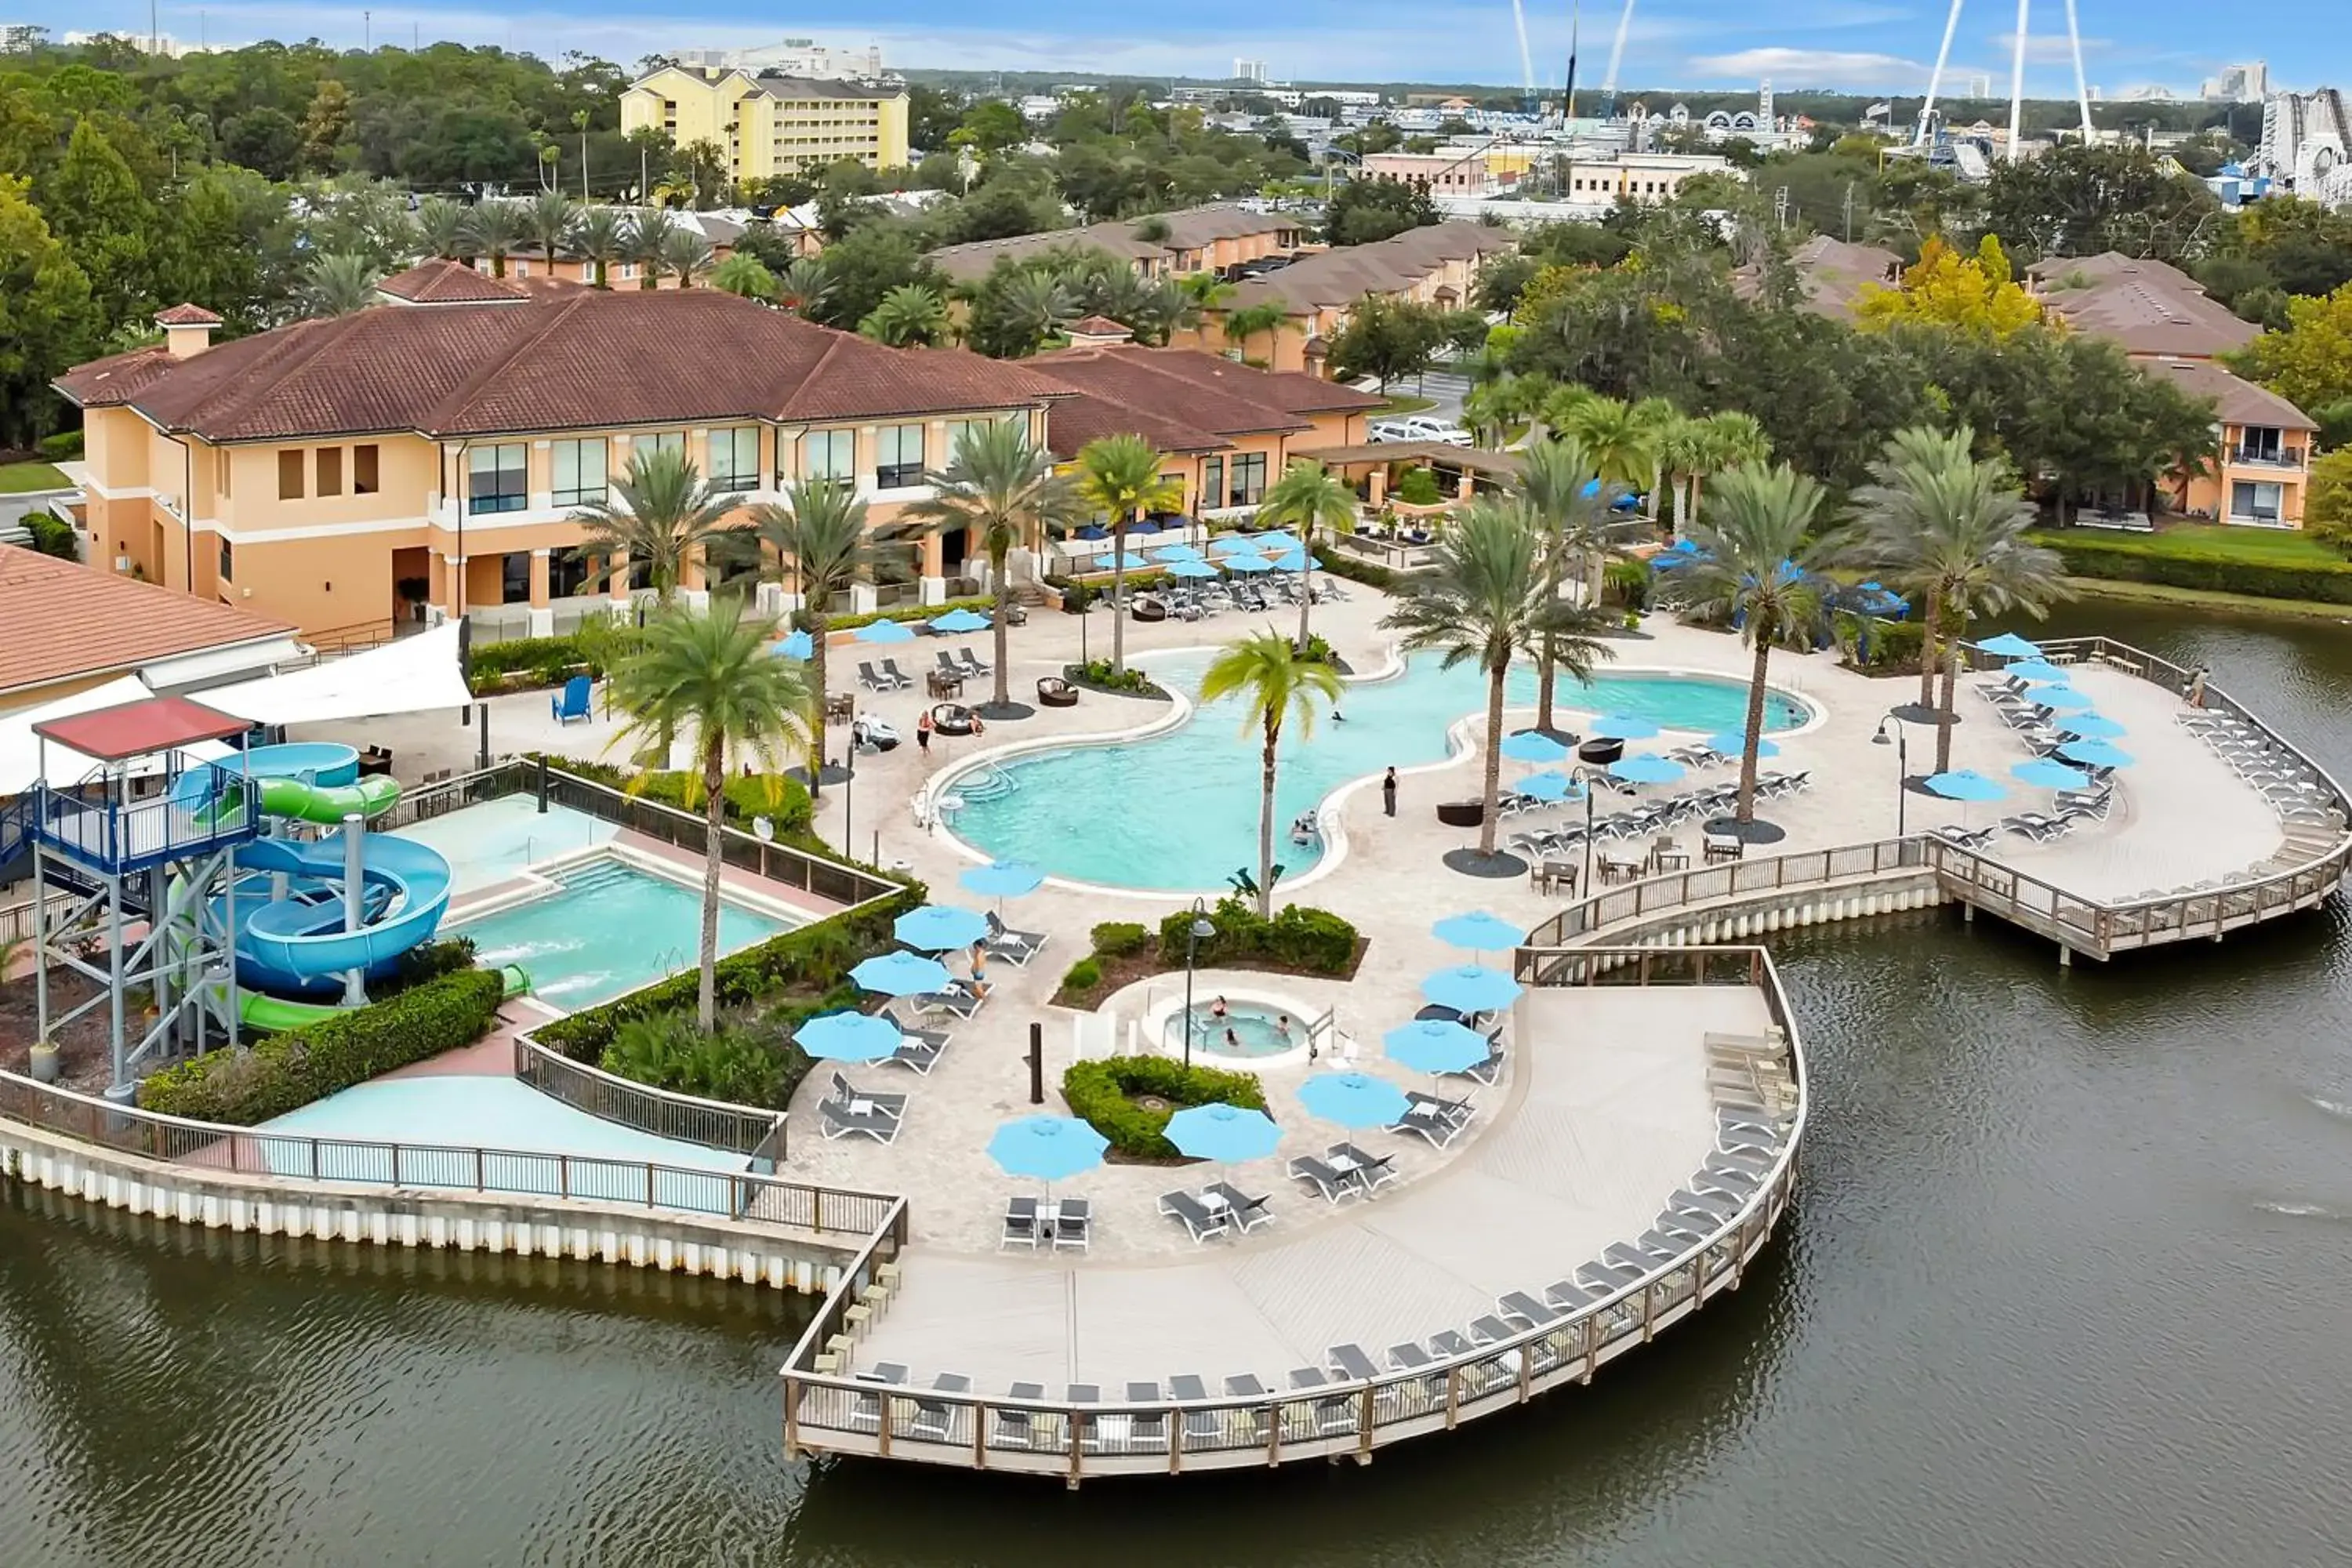 Swimming pool, Pool View in Regal Oaks A Clc World Resort - Kissimmee